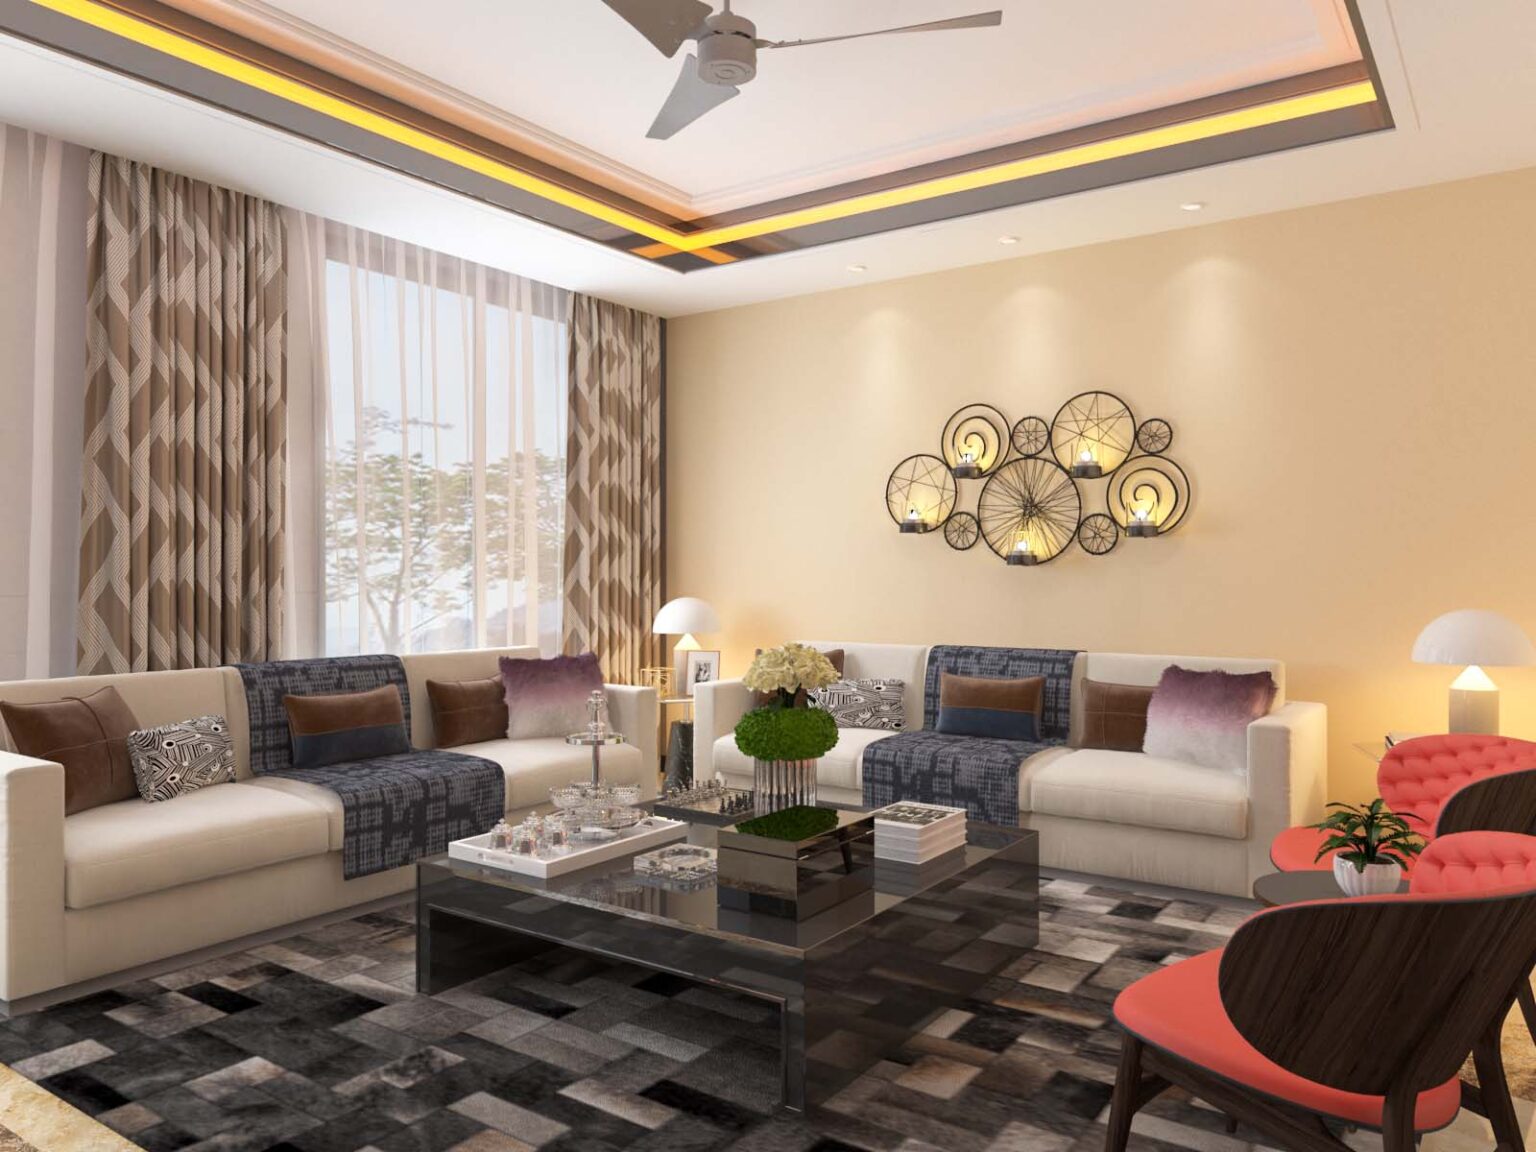 Delhi Living Room Design | Delhi Style Interior Design Ideas